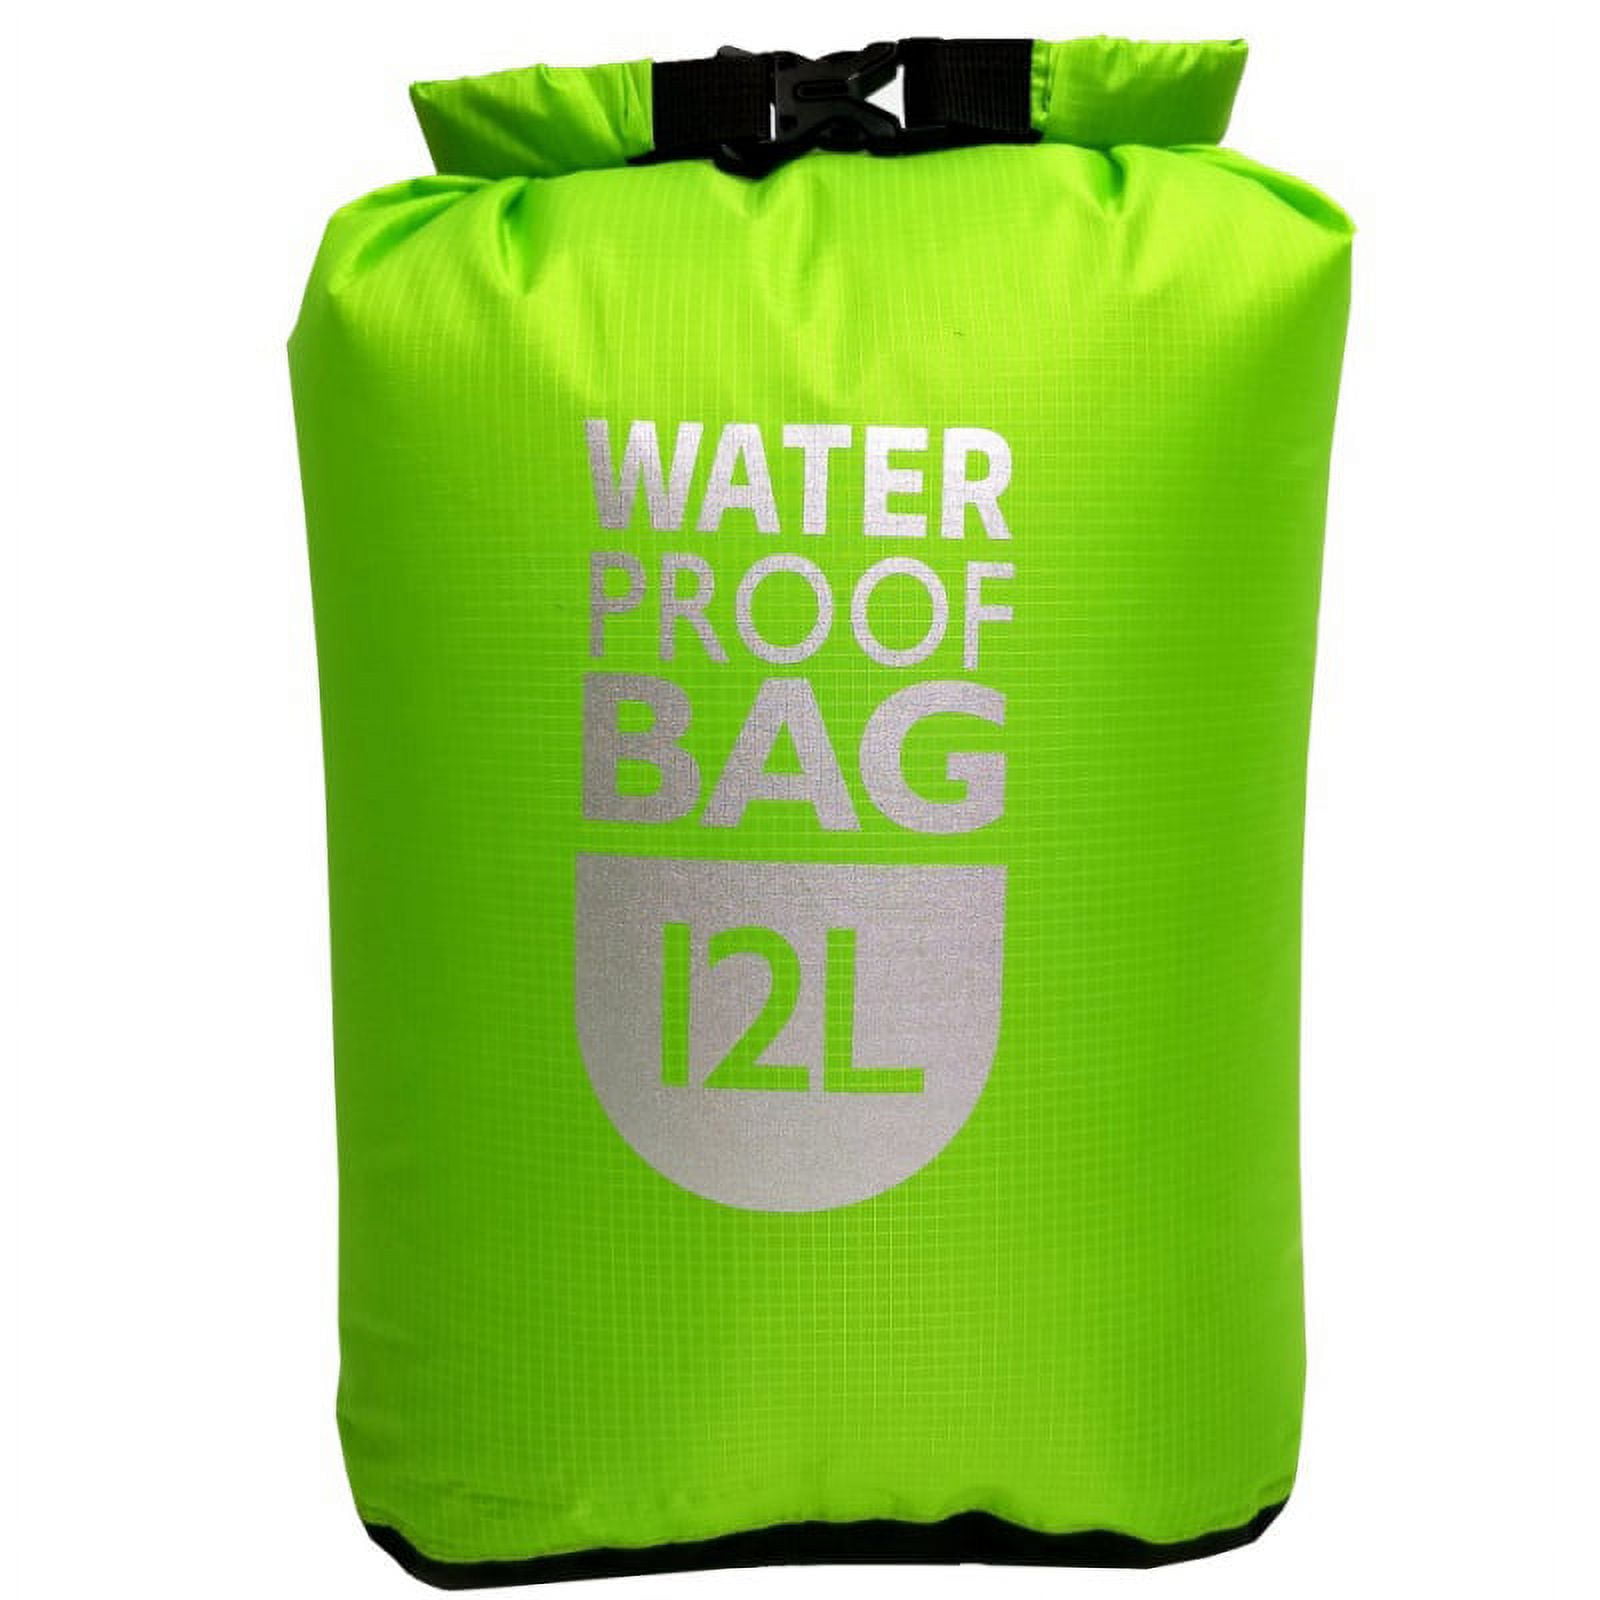 Waterproof Dry Bag Floating Roll Top Sack for Canoe Kayak Boating Camping Swimming Hiking Rafting Swimming Dry Organizer Beach Fishing Storage Bag Dry